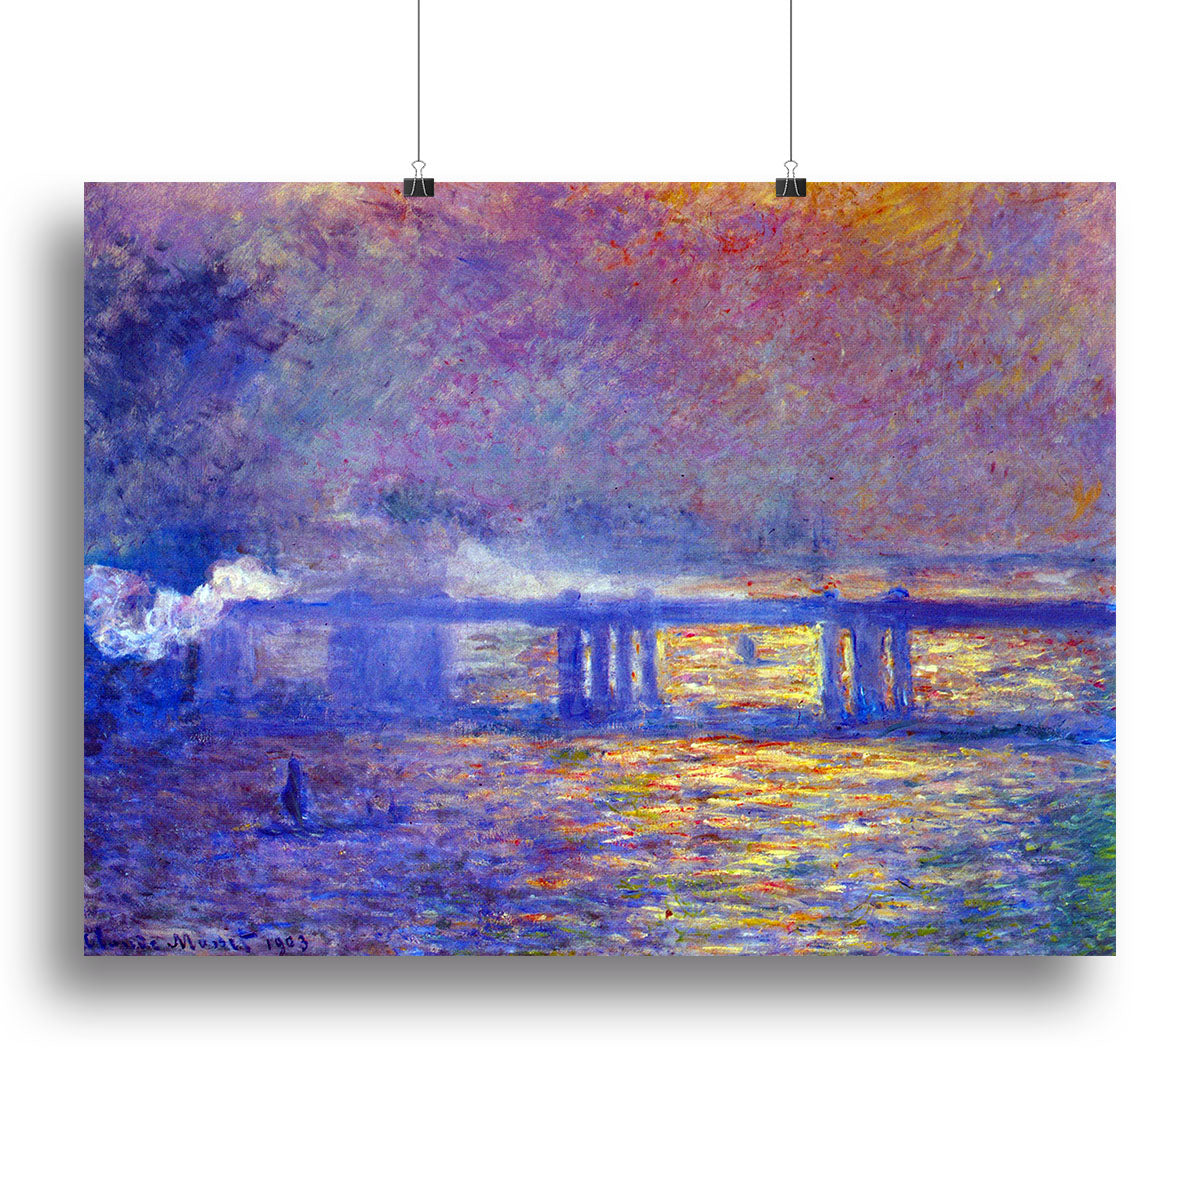 Charing cross bridge by Monet Canvas Print or Poster - Canvas Art Rocks - 2